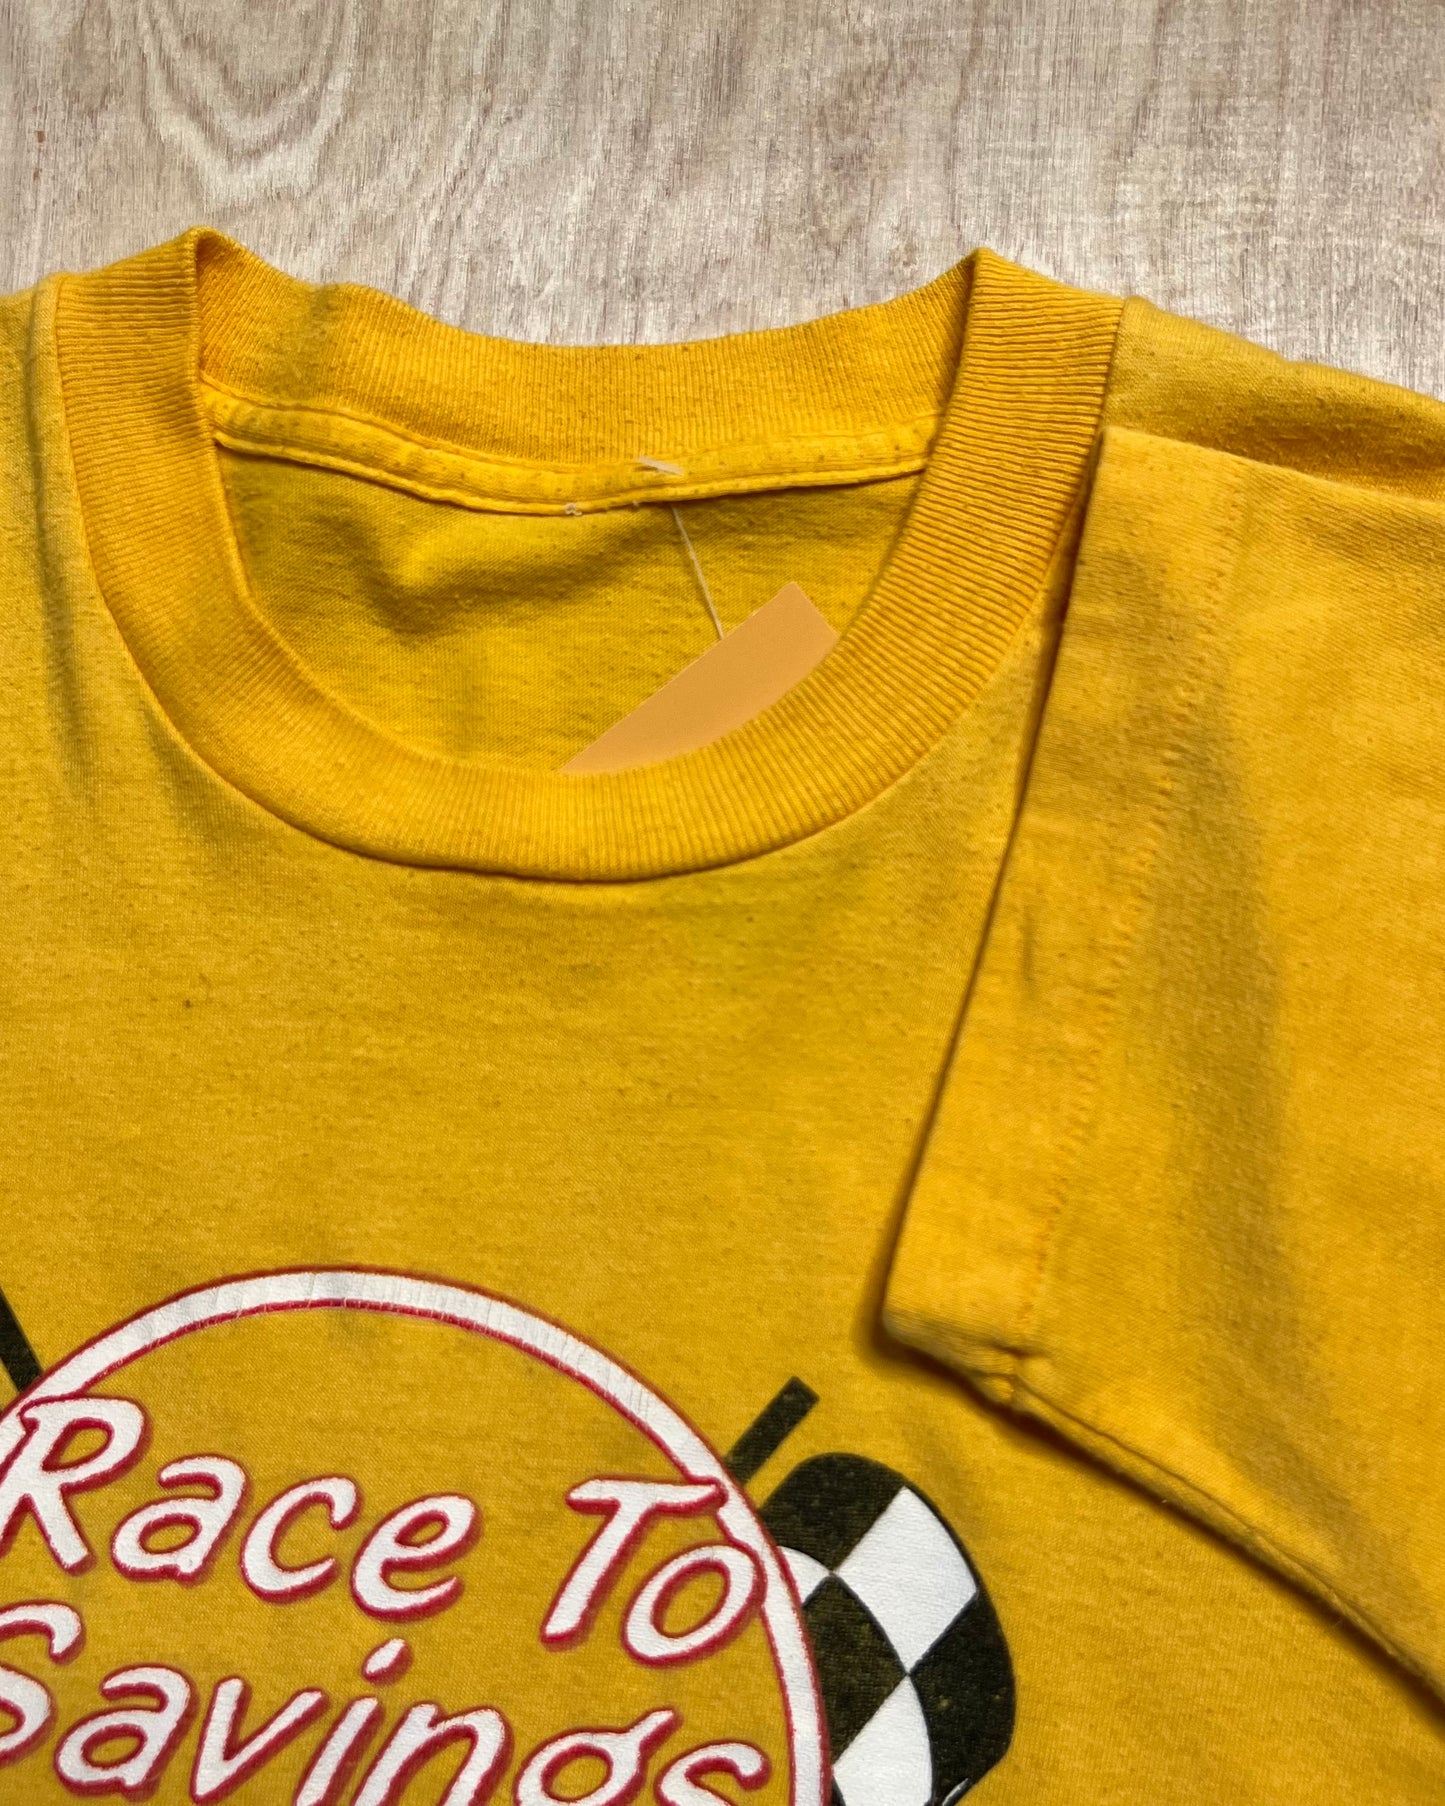 1990's Menards Racing Single Stitch T-Shirt